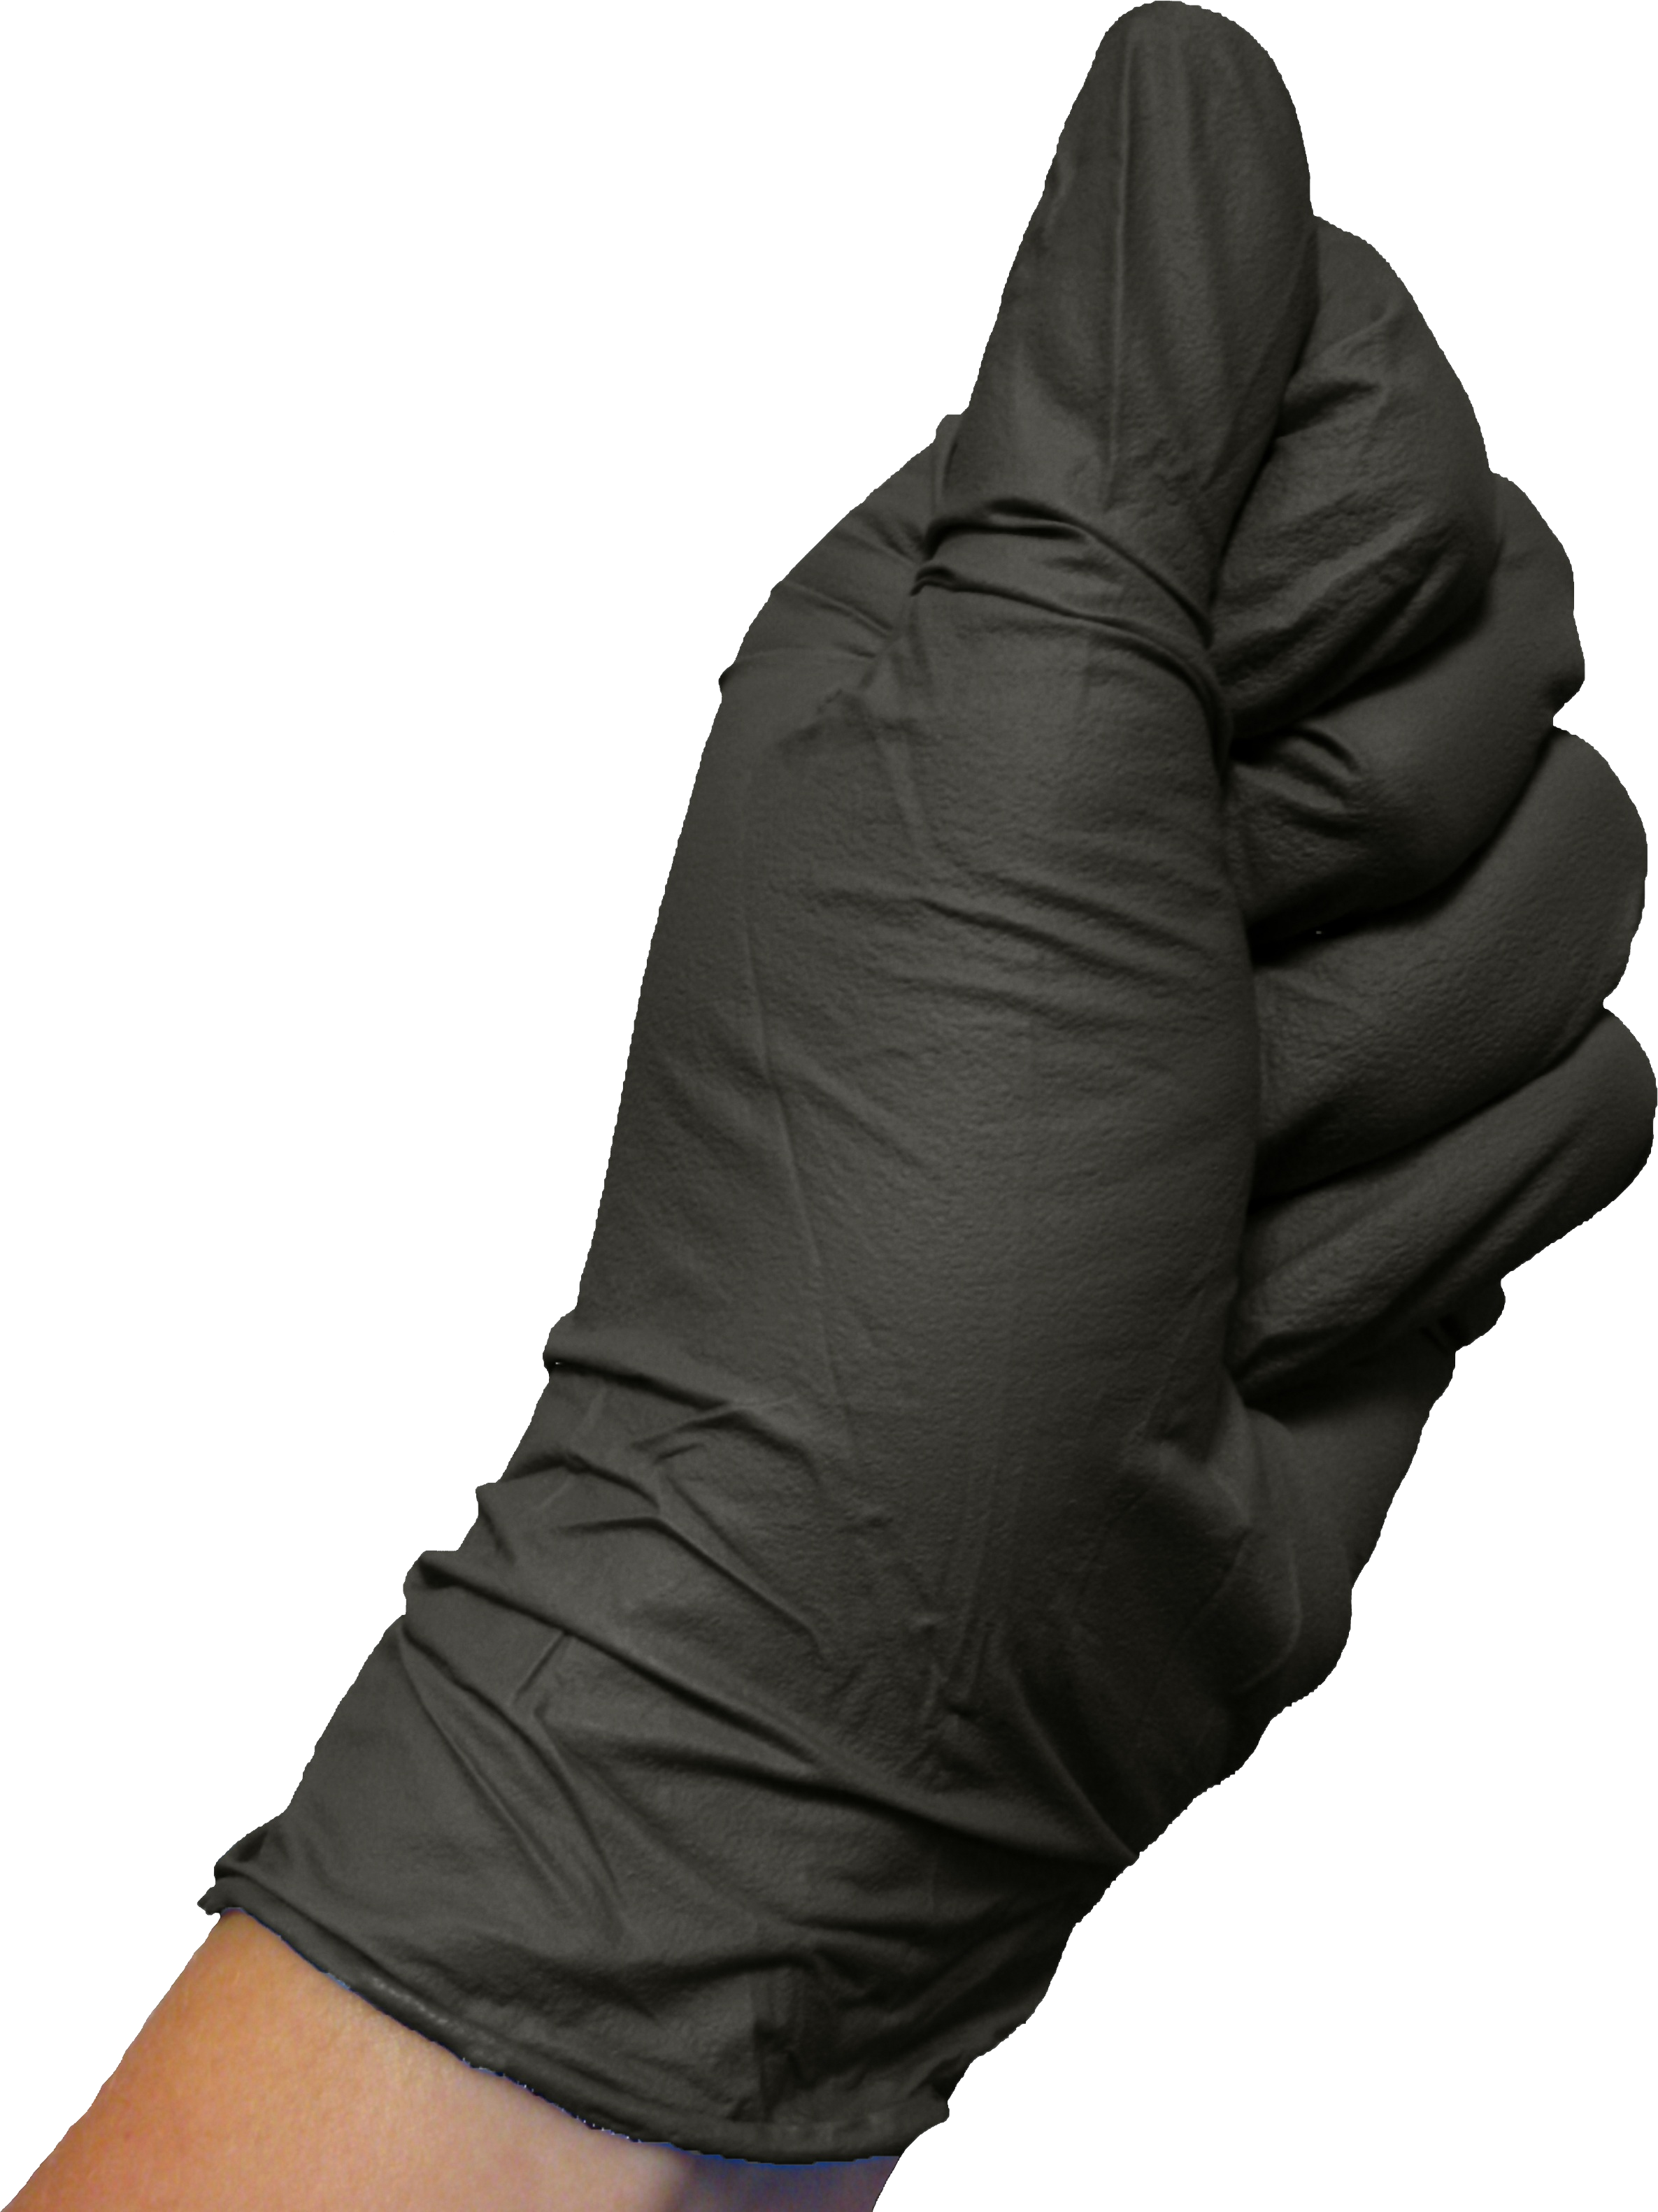 Gloves PNG - 27495